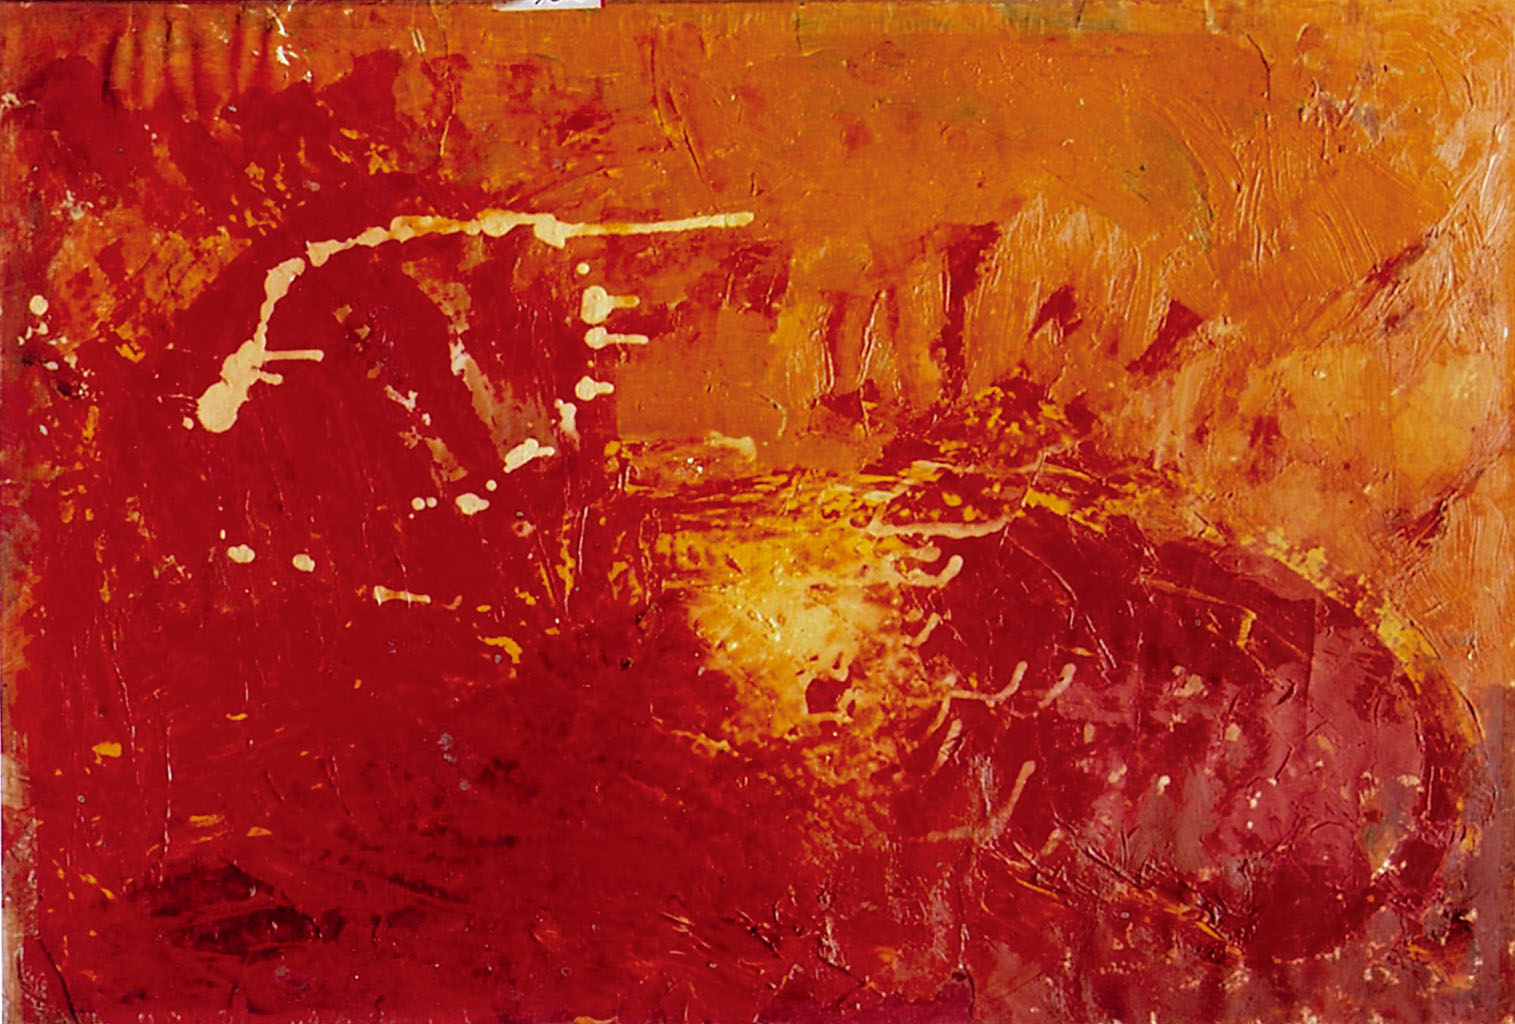 A1991李青萍《熔岩》 布面油画 75.5cm×52cm 90年代初